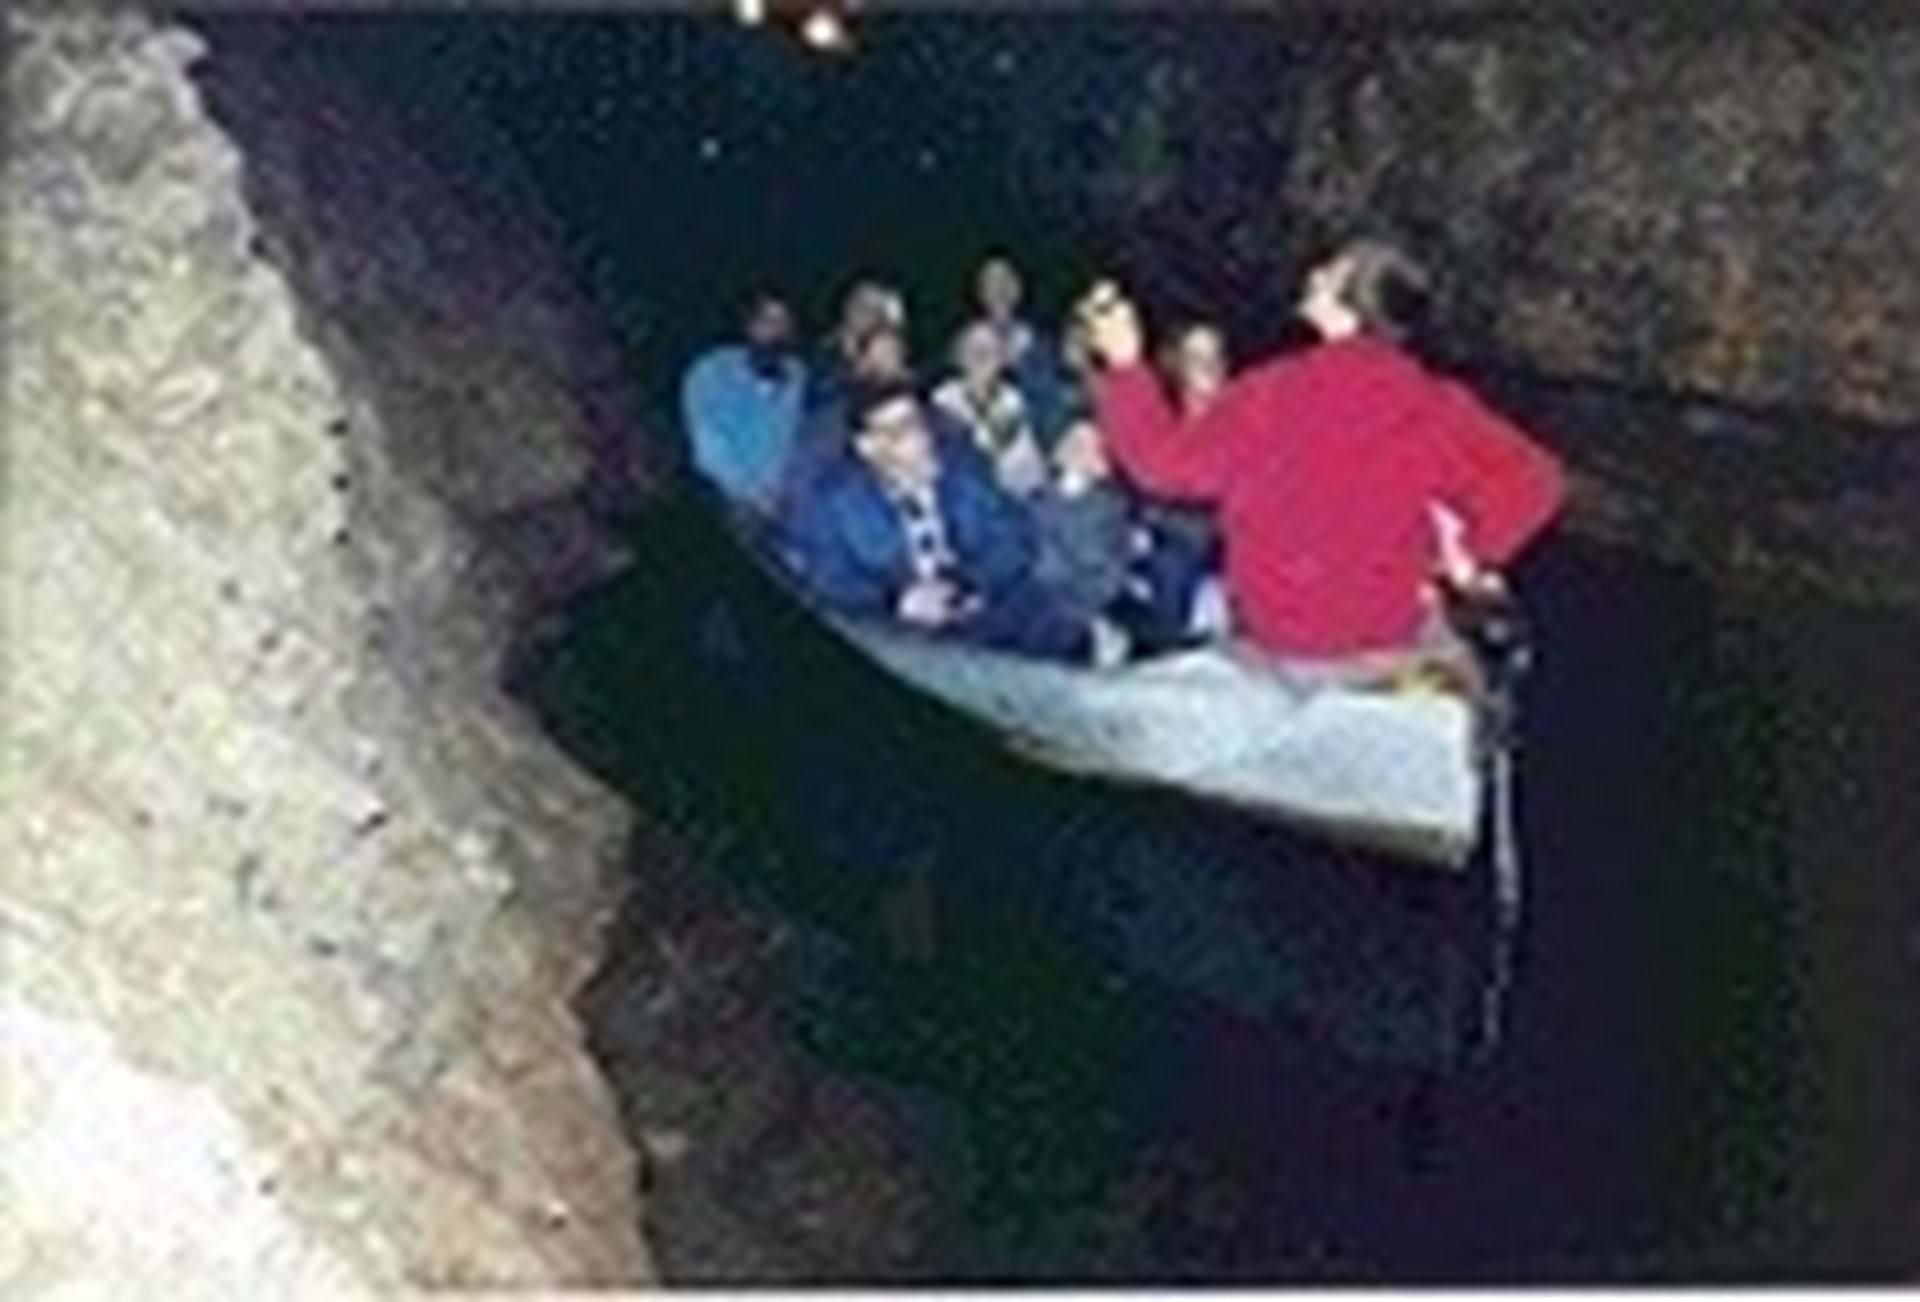 Inside Spook Cave (requires bending)